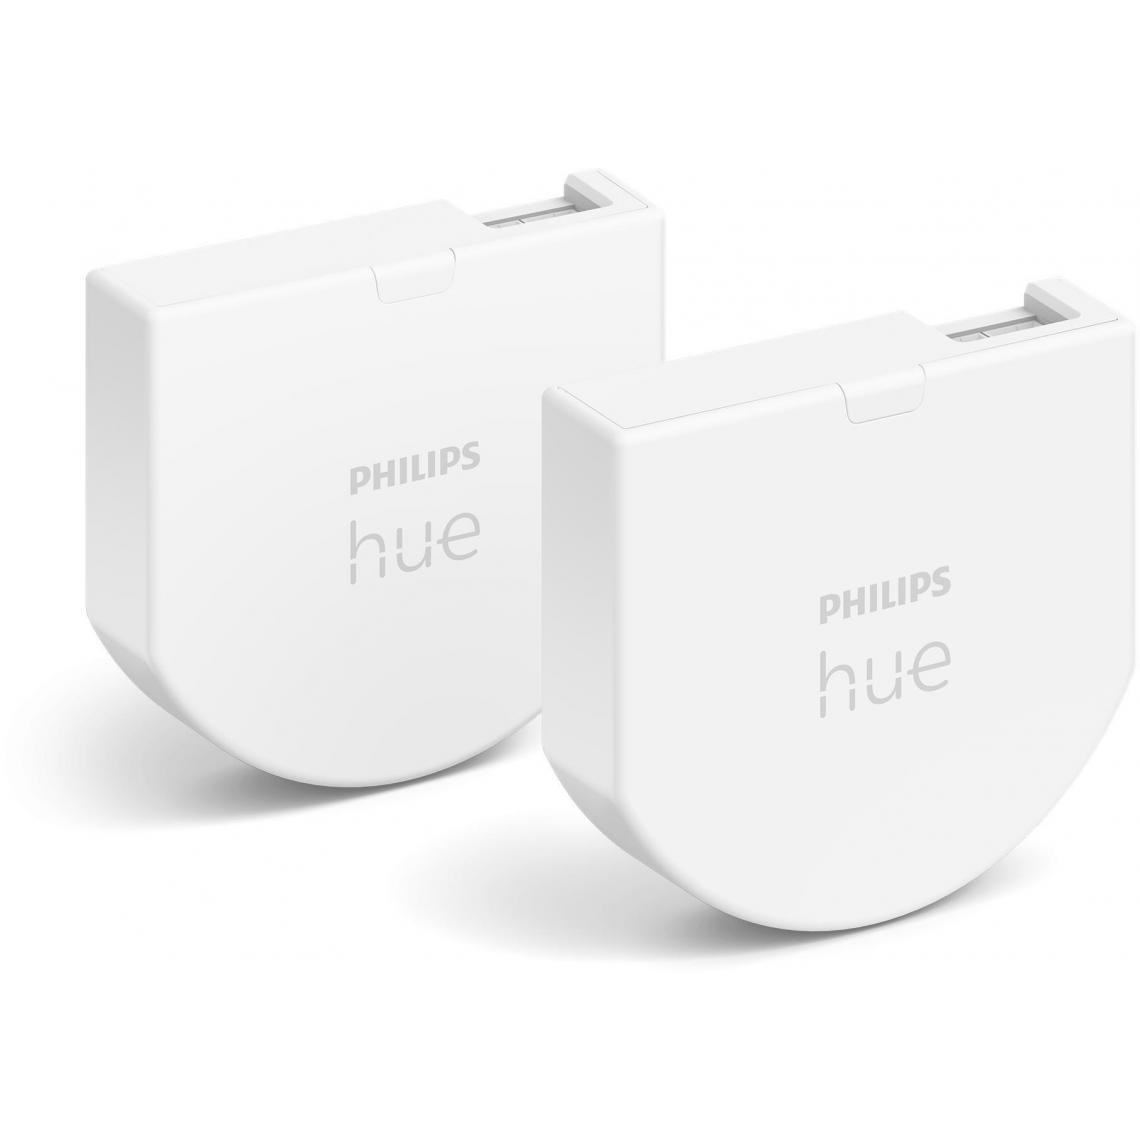 Philips Hue - Module d'interrupteur mural - Blanc x2 - Interrupteur connecté